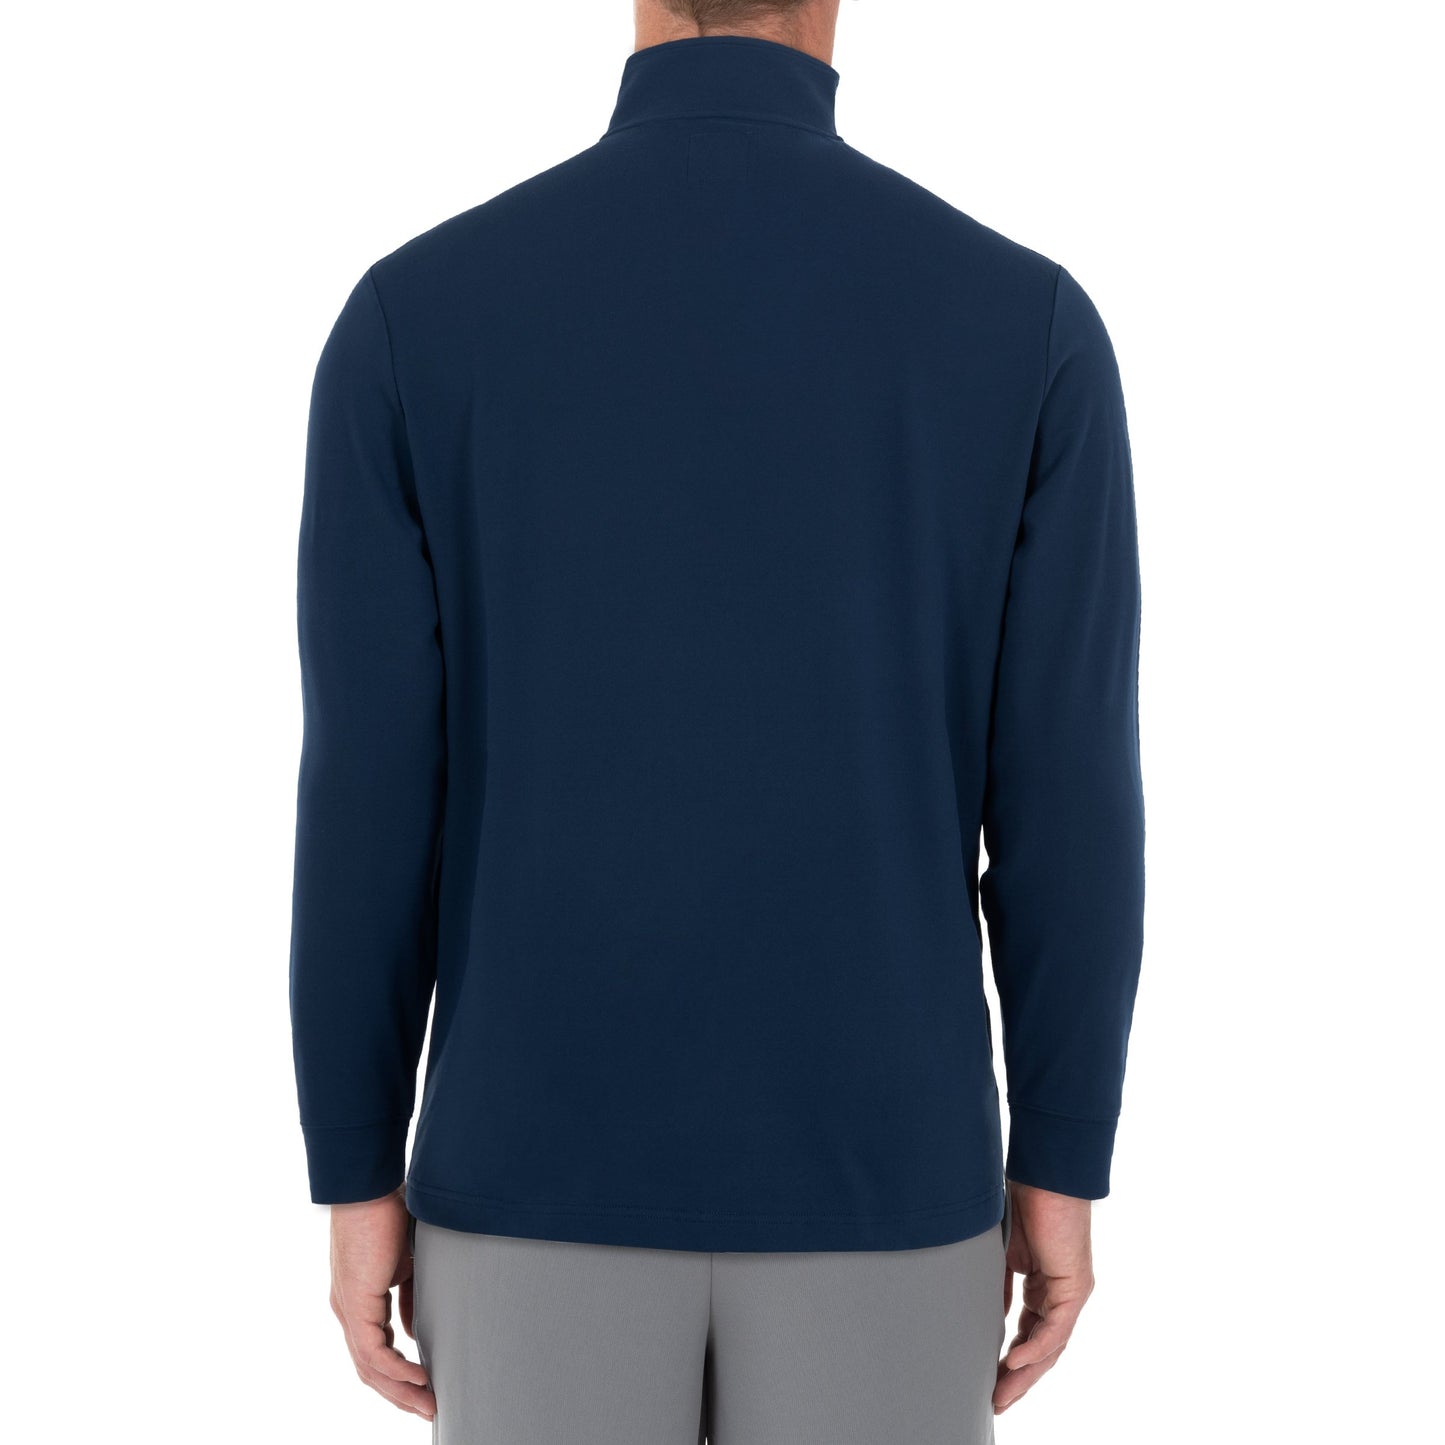 Men's Quarter Zip Lightweight Navy Pullover